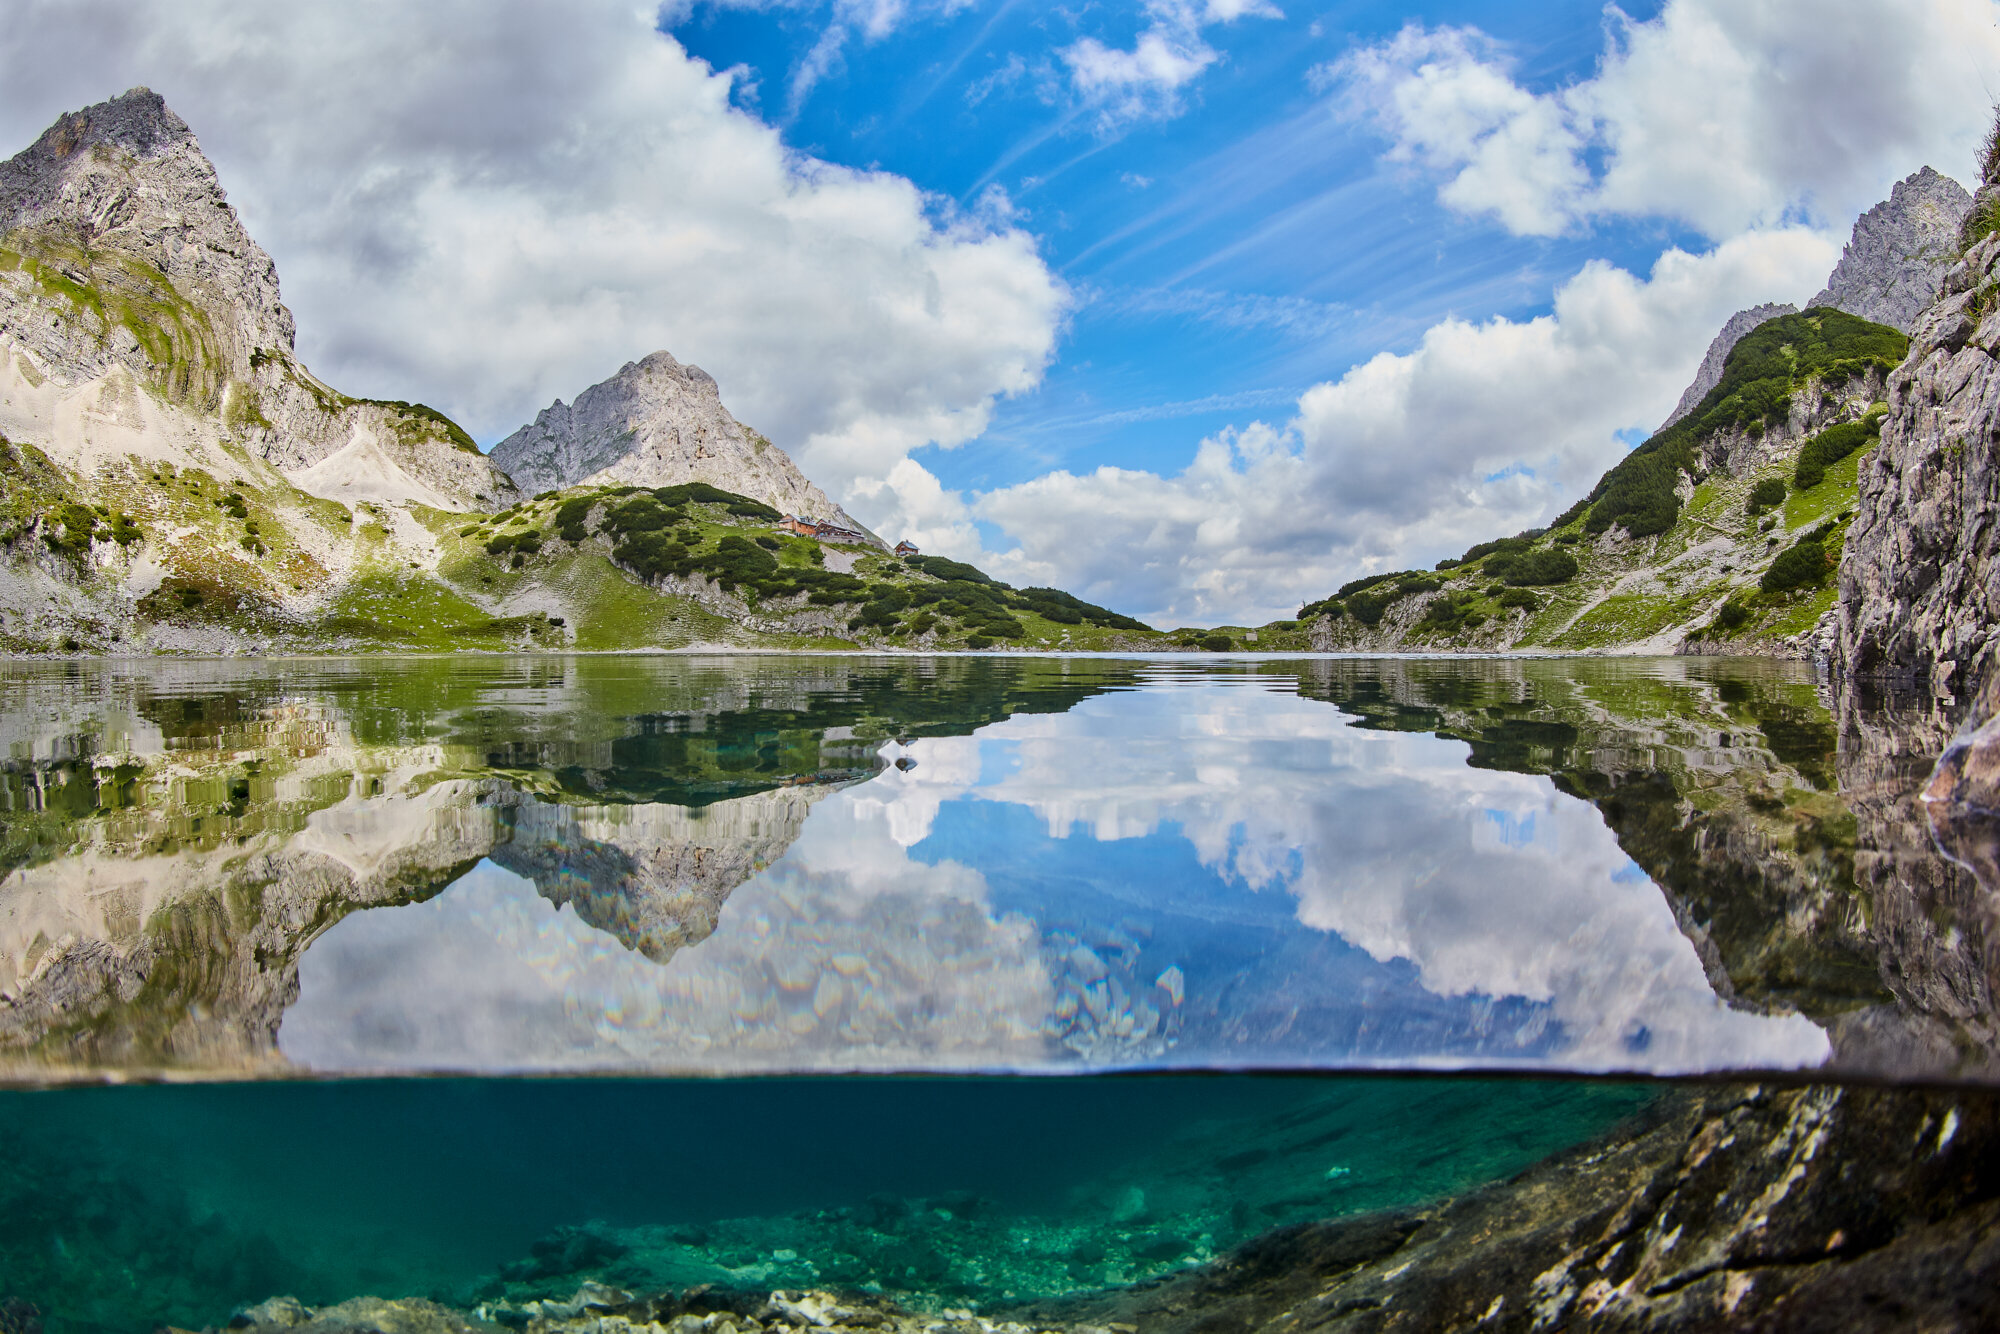 Drachensee in Tyrol, Austria